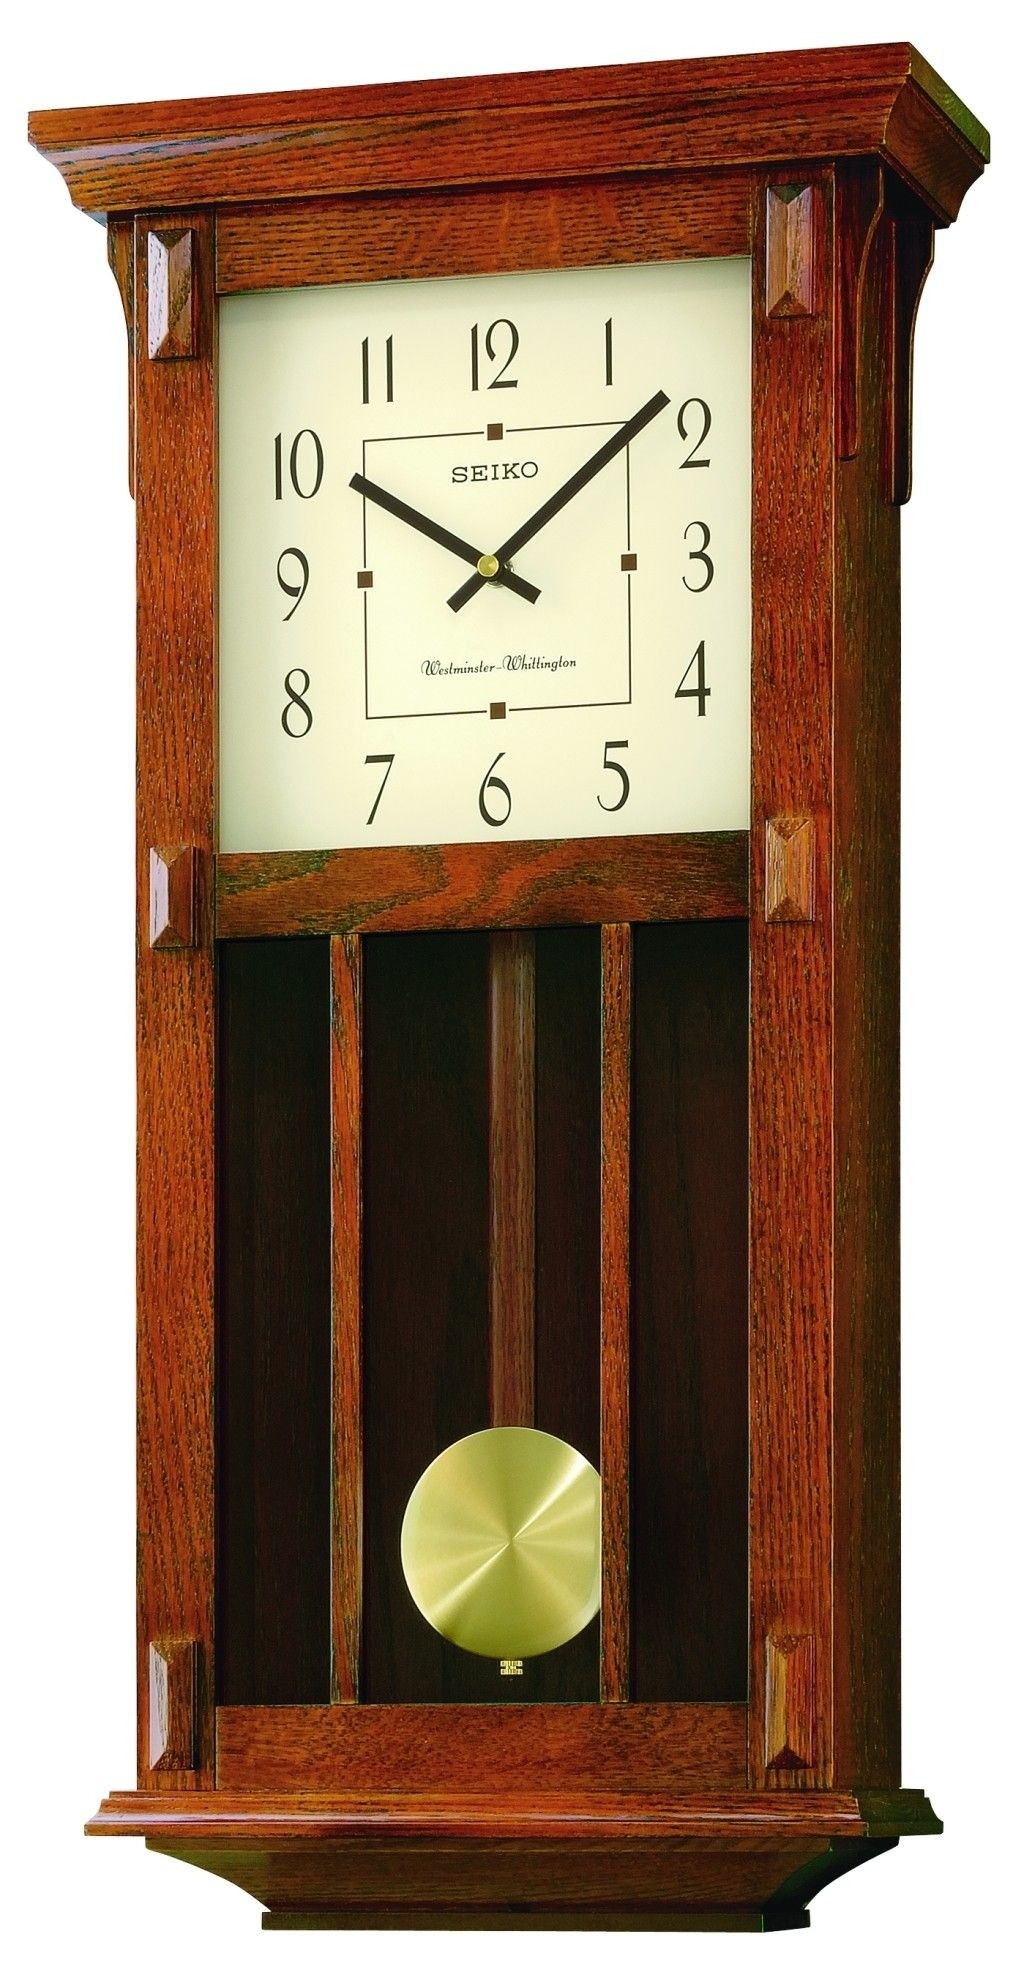 Mission mantel clock